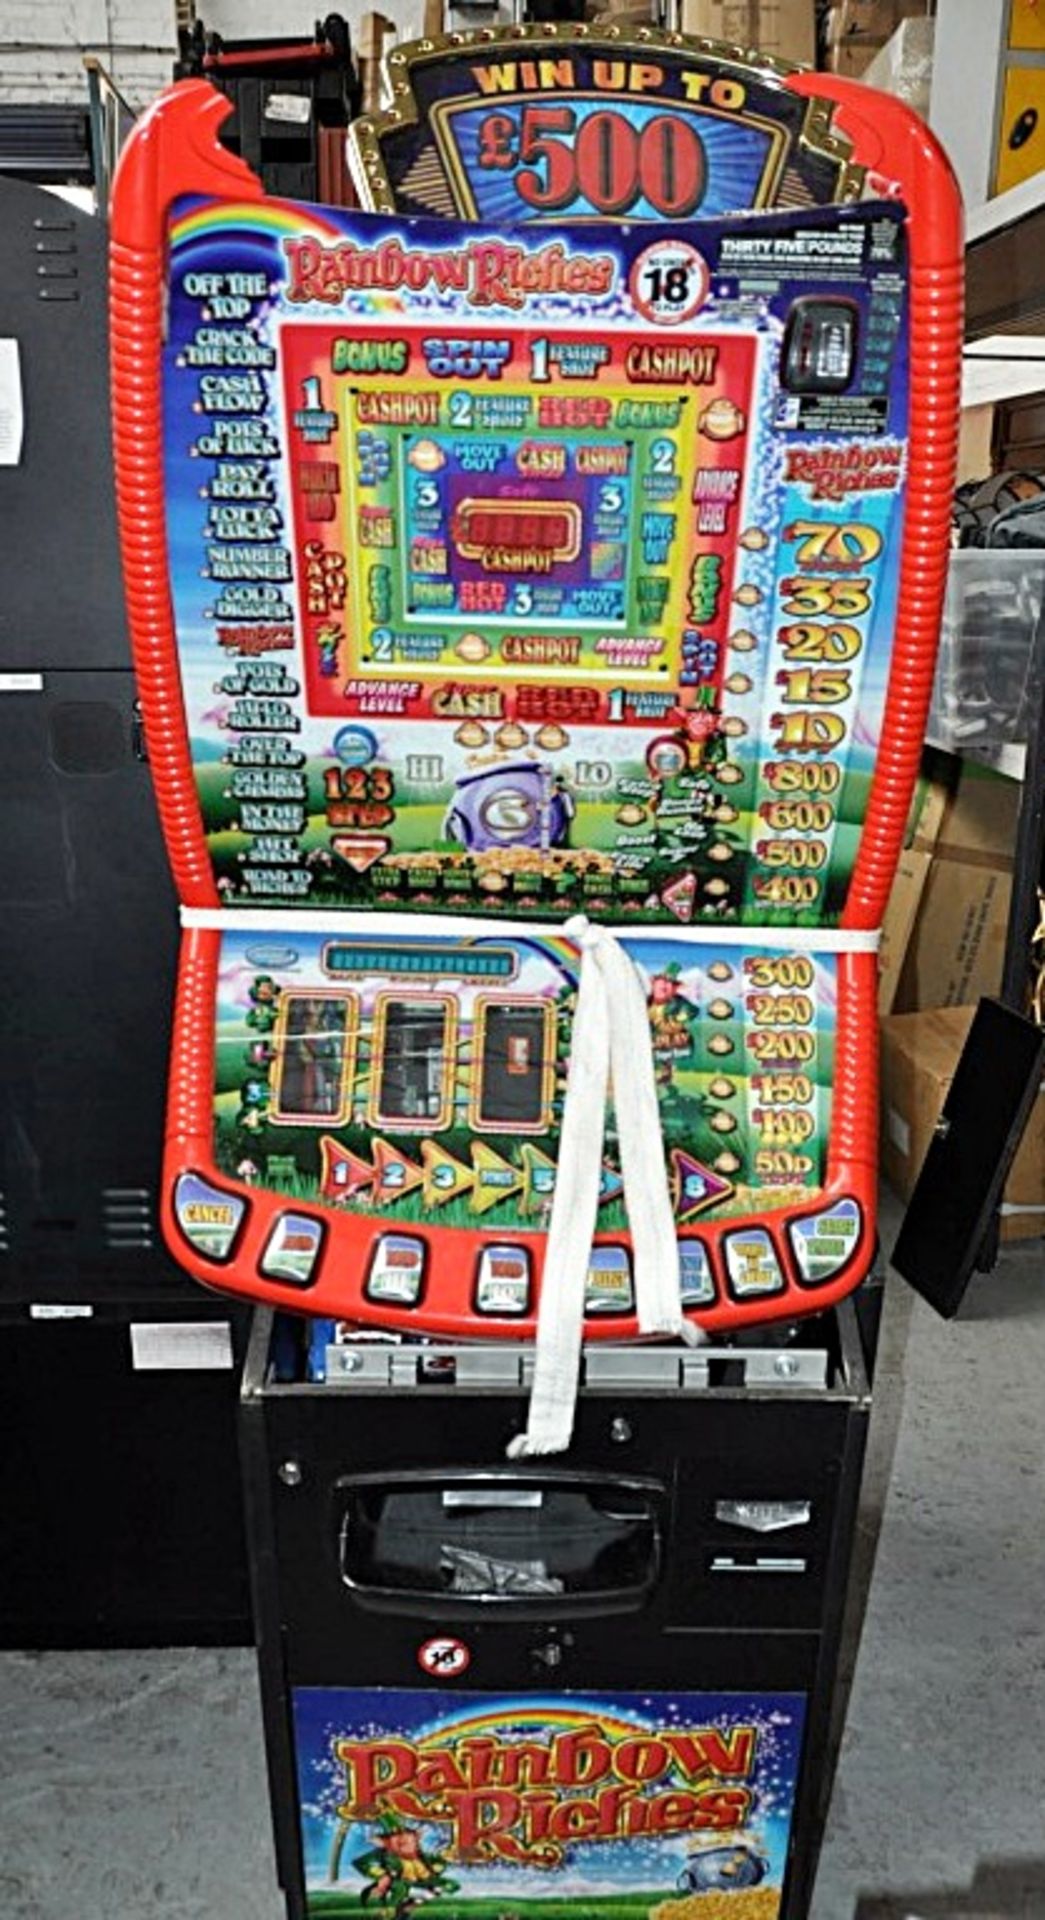 1 x "RAINBOW RICHES" Arcade Fruit Machine - Manufacturer: Barcrest - *BADLY DAMAGED - SEE BELOW* £ - Image 2 of 3